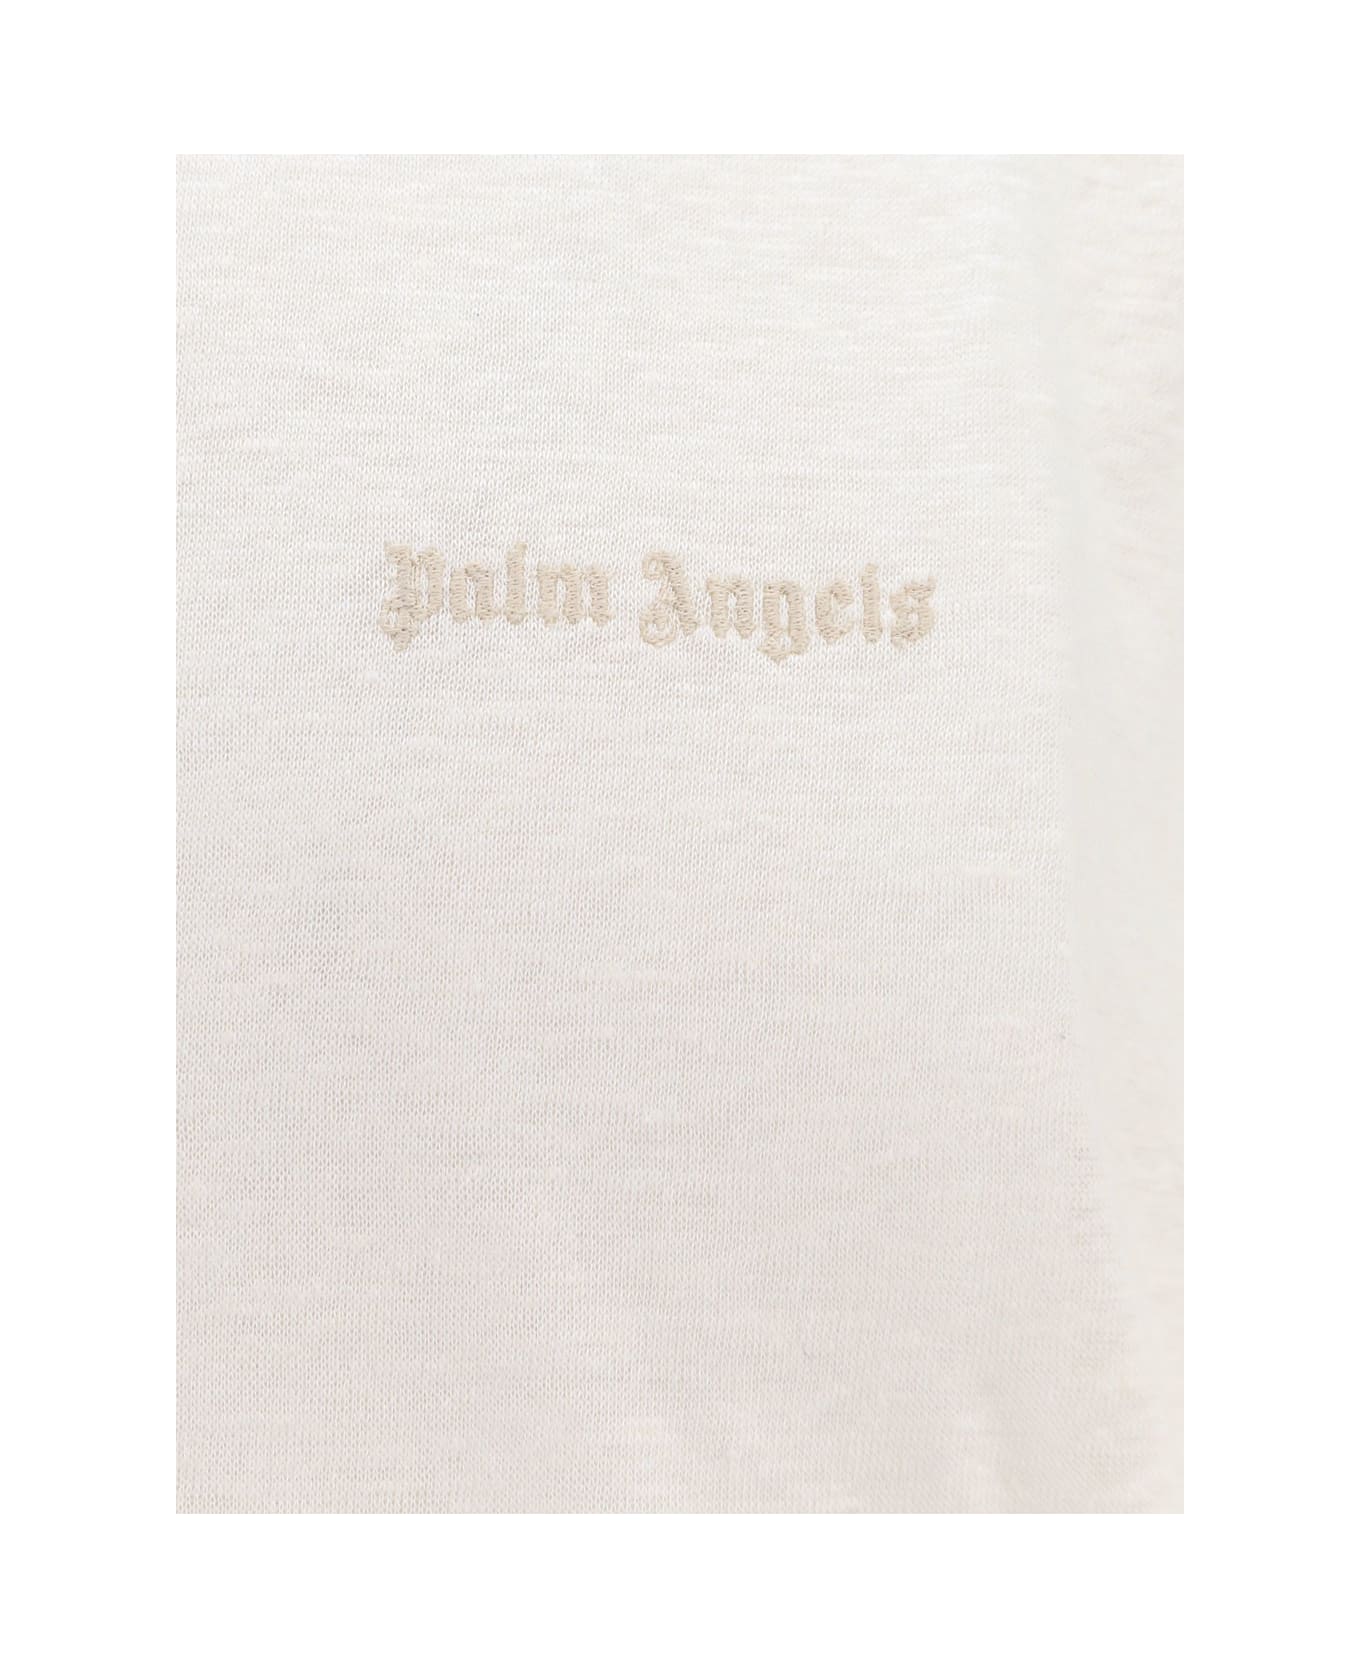 Palm Angels Classic Linen Logo T-shirt - White